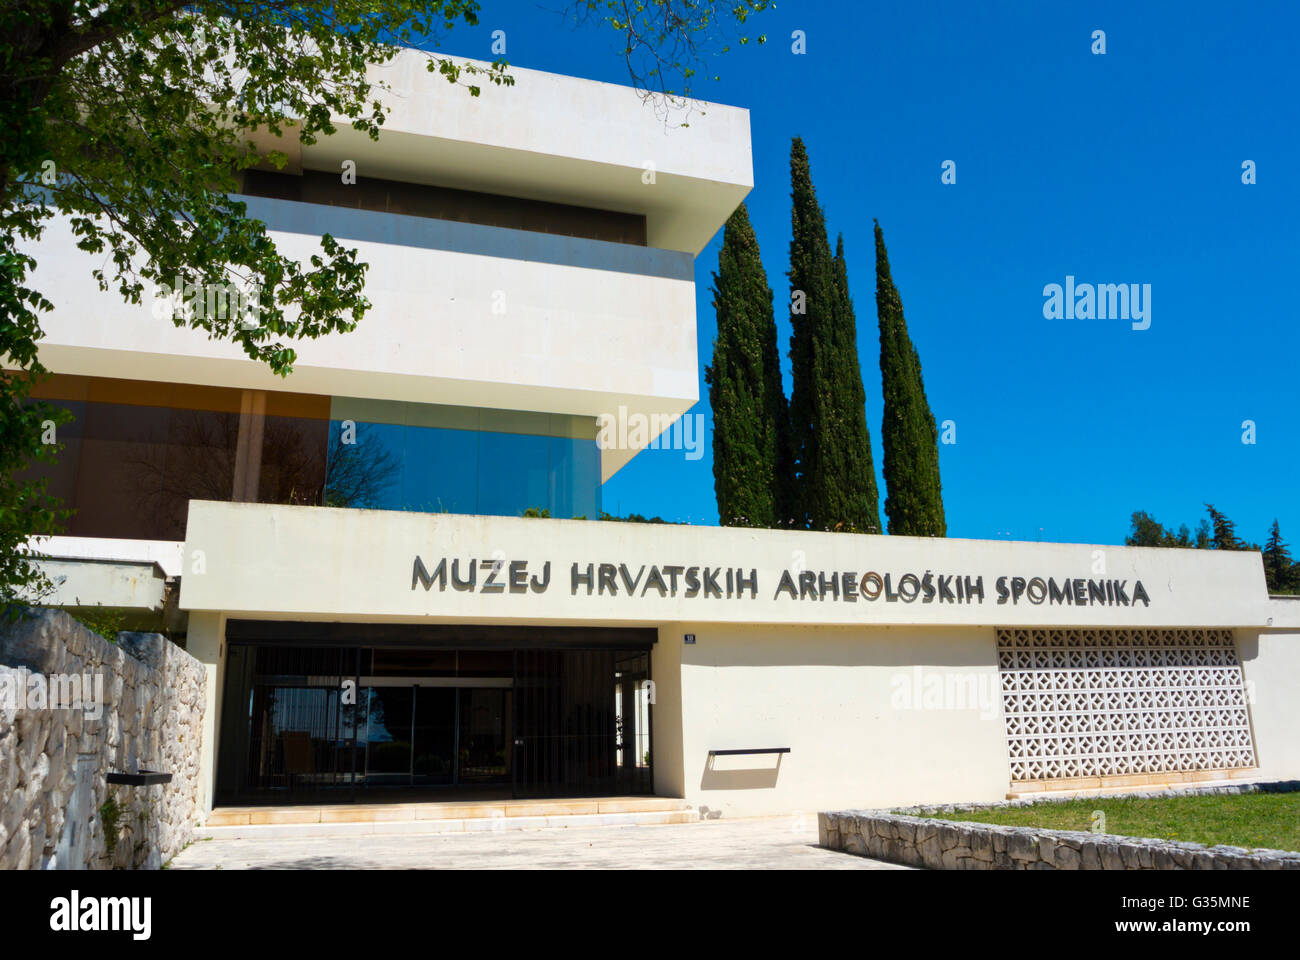 Museum of Croatian Archeological Monuments, Meje district, Split, Dalmatia, Croatia Stock Photo